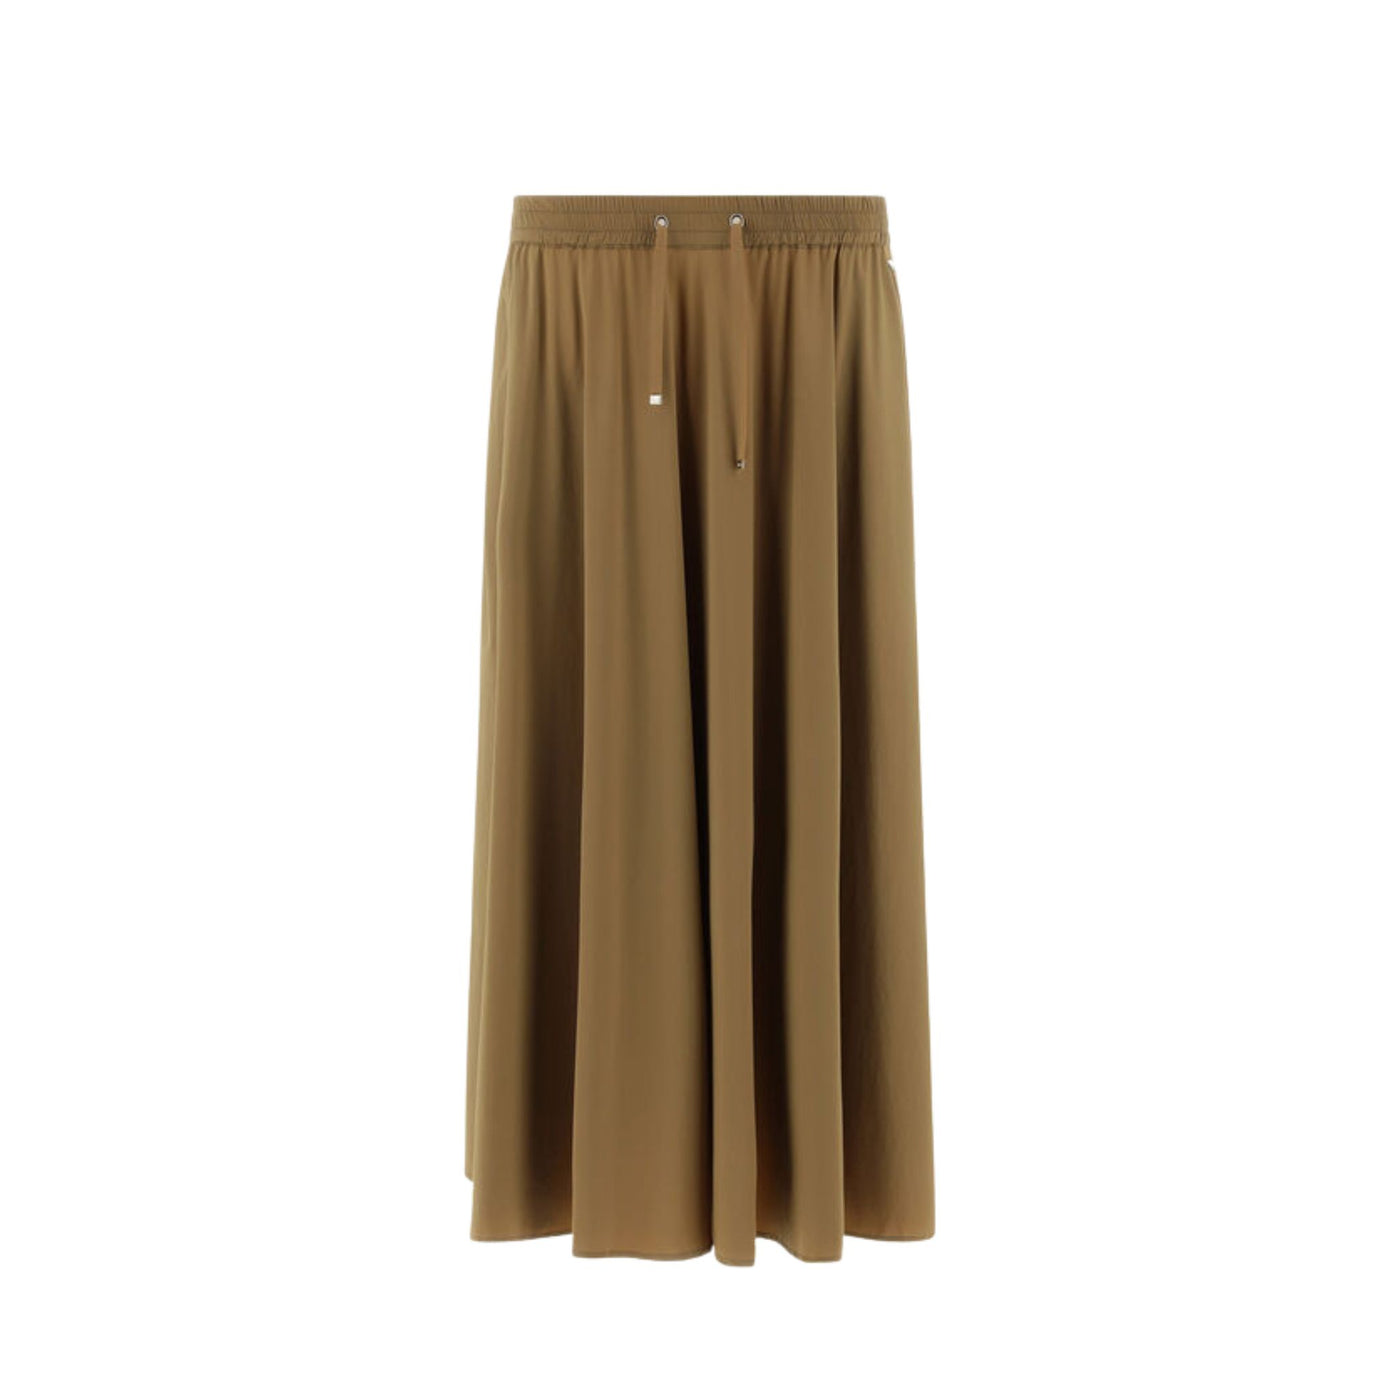 Women's skirt with pleats